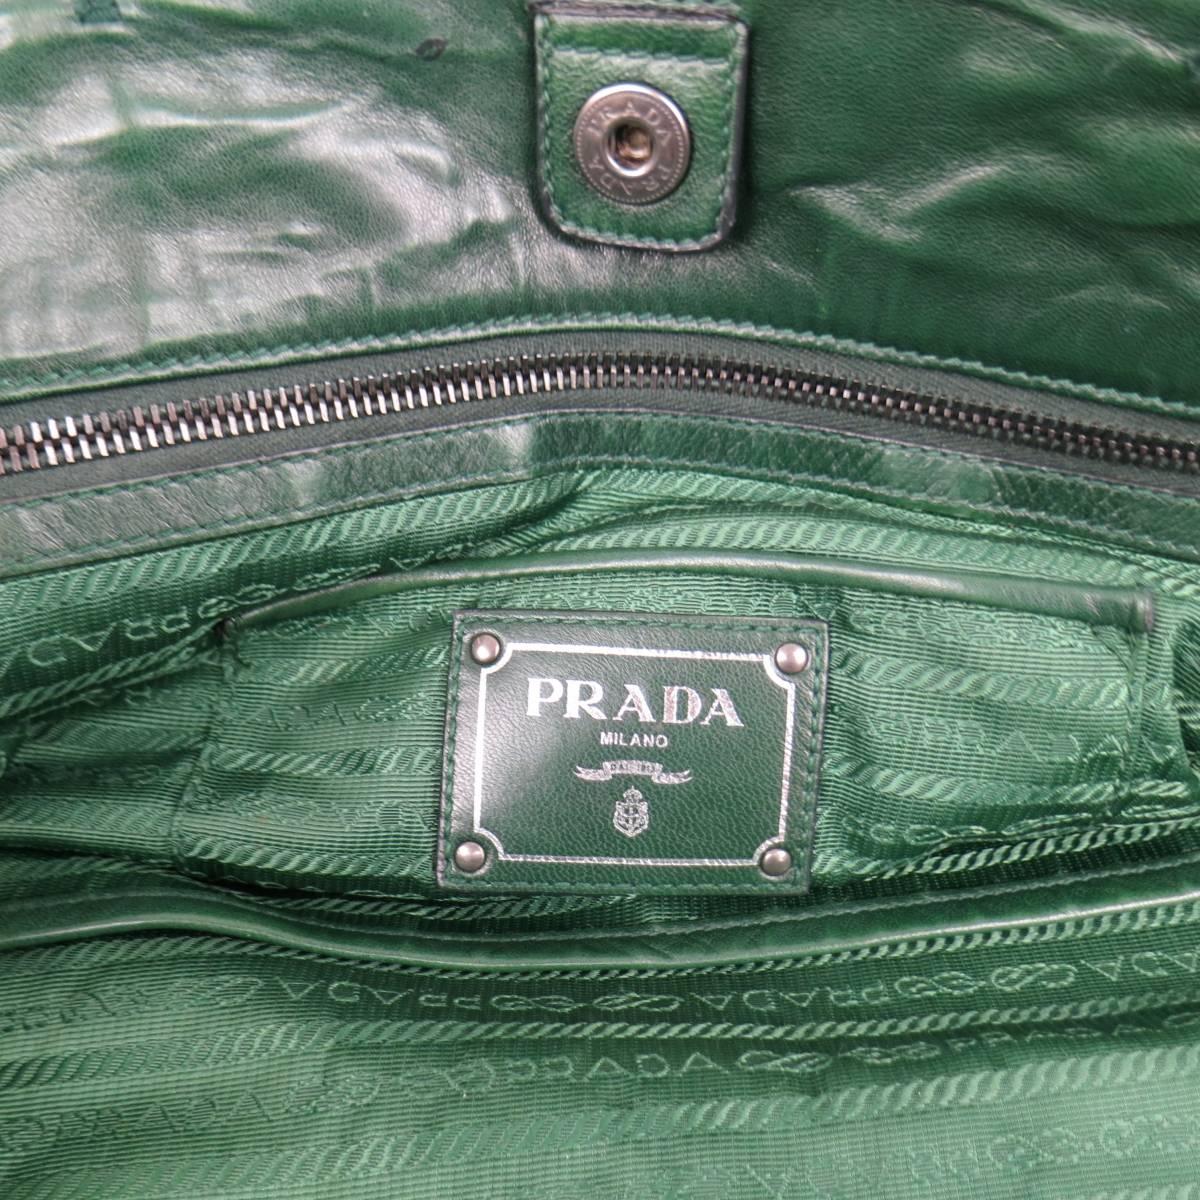 PRADA Green Textured Leather Tote Handbag 4